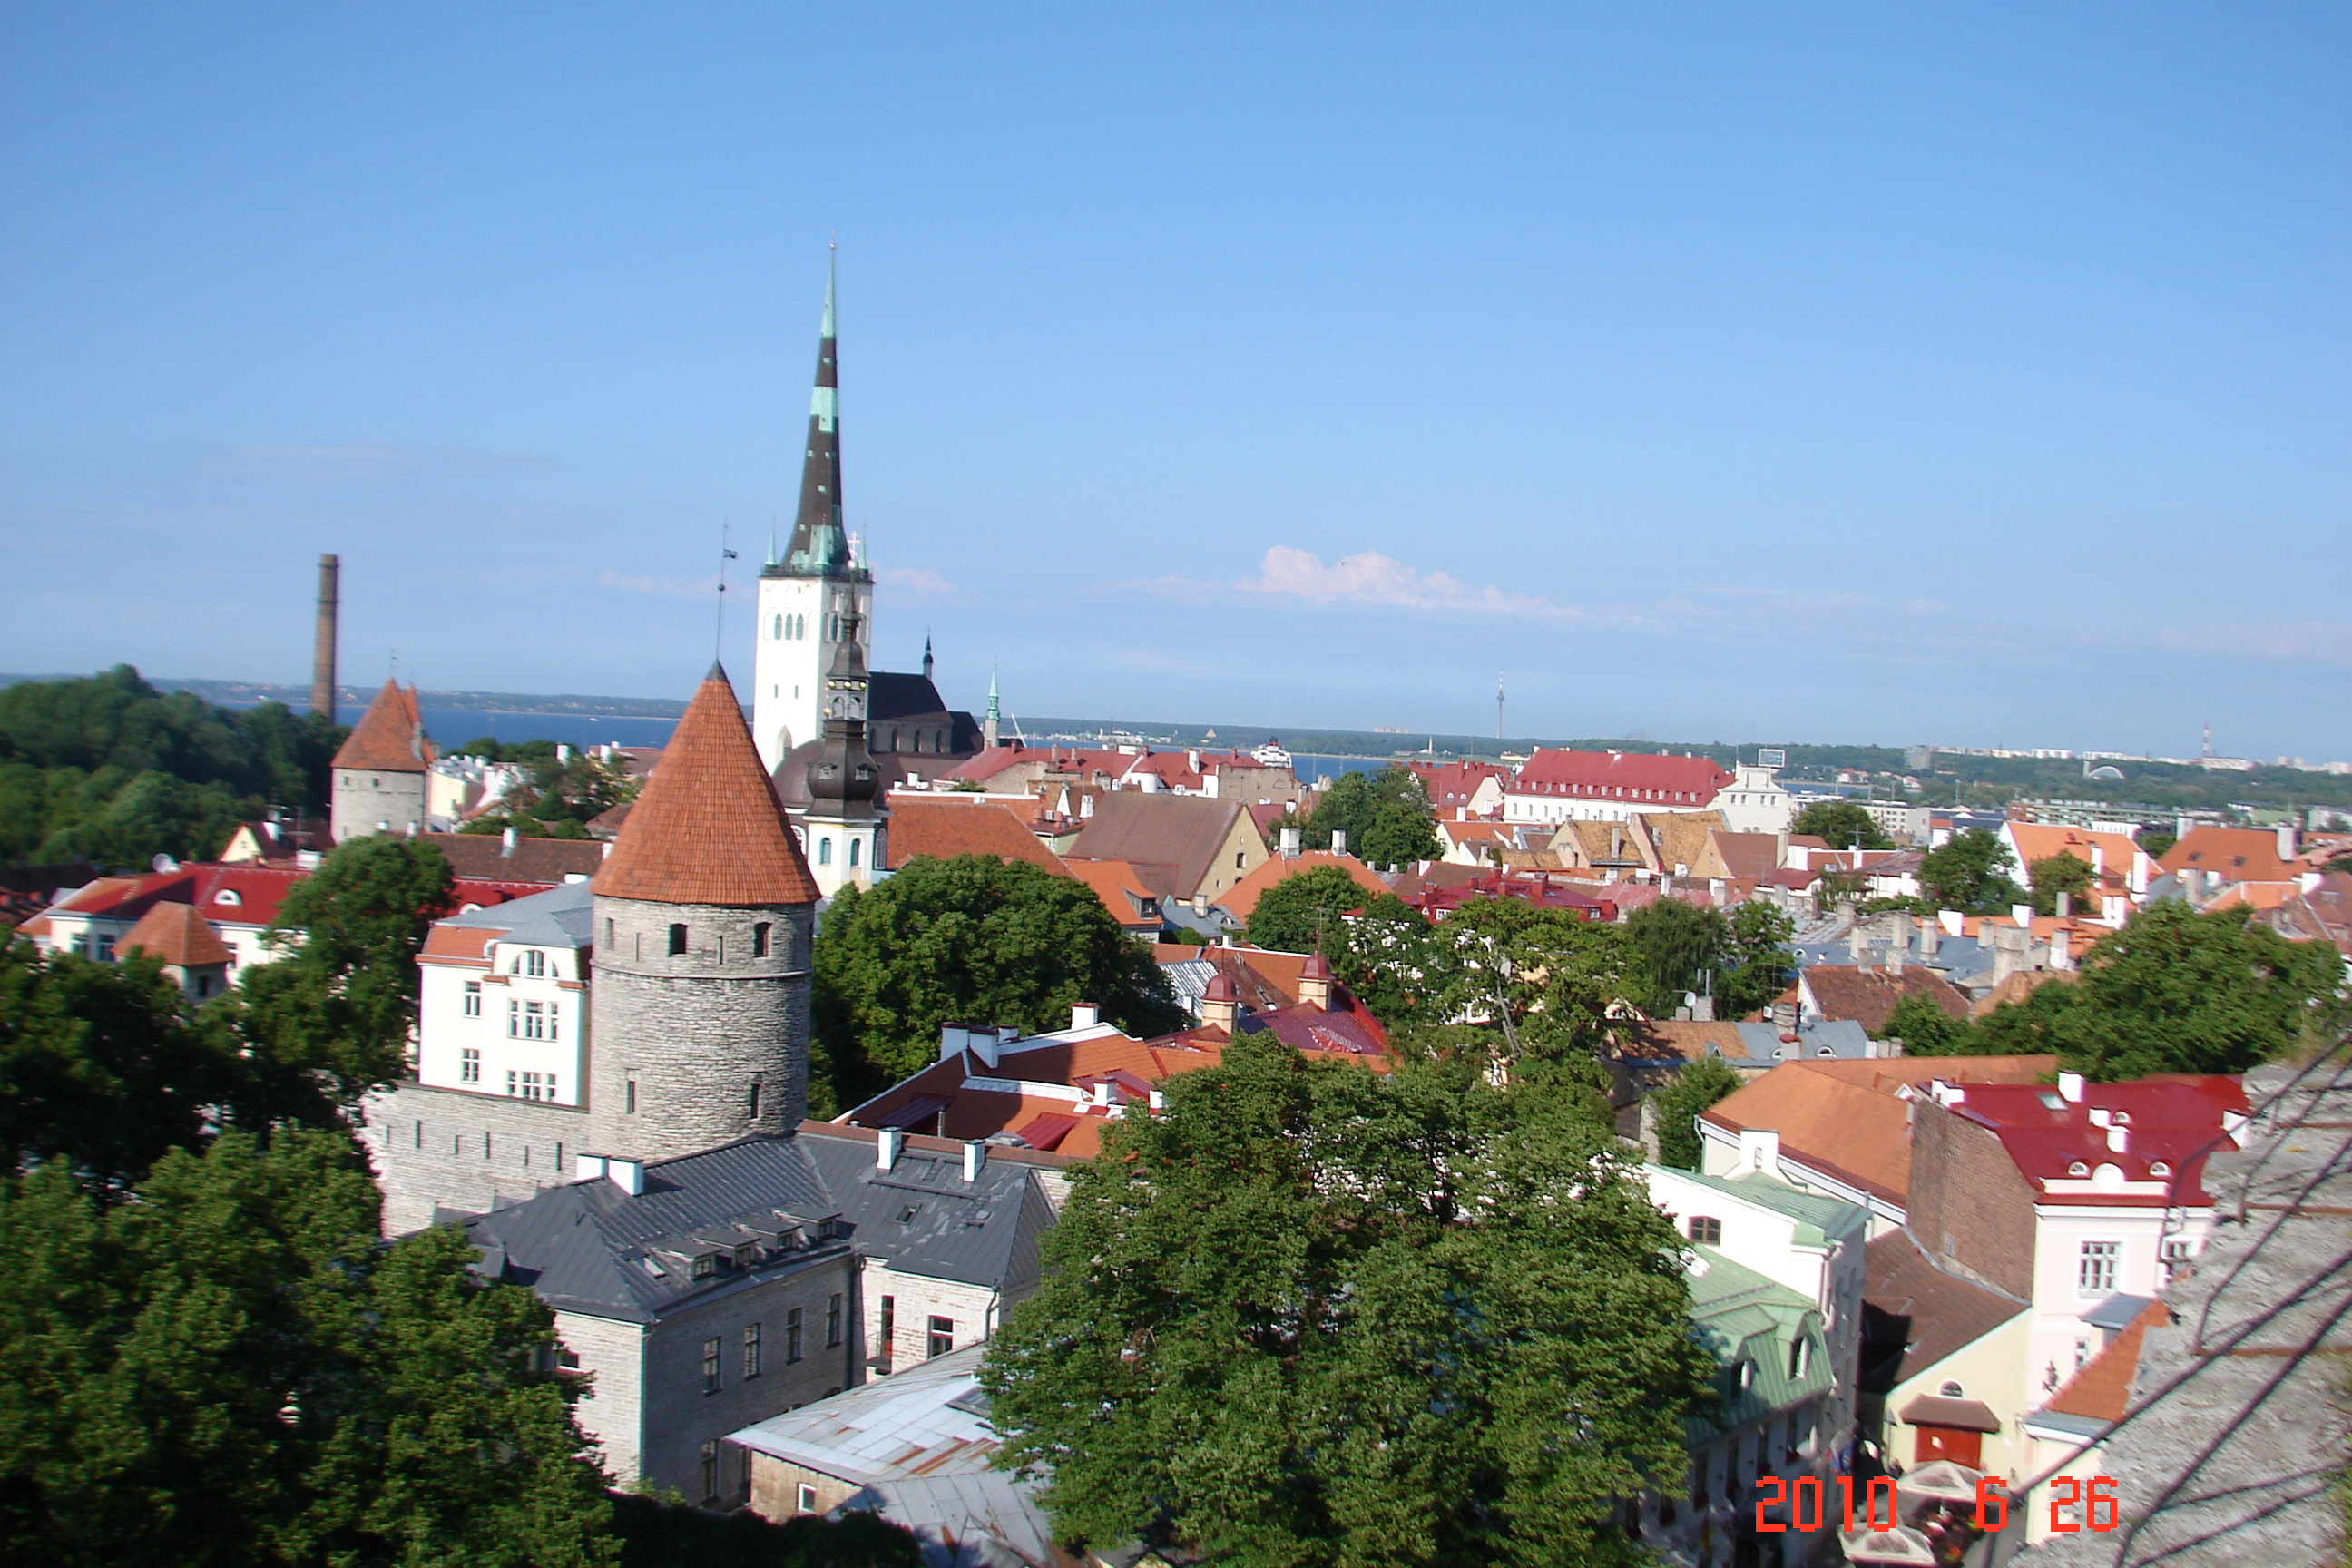 A tourist's take on Tallin, the charming capital of Estonia